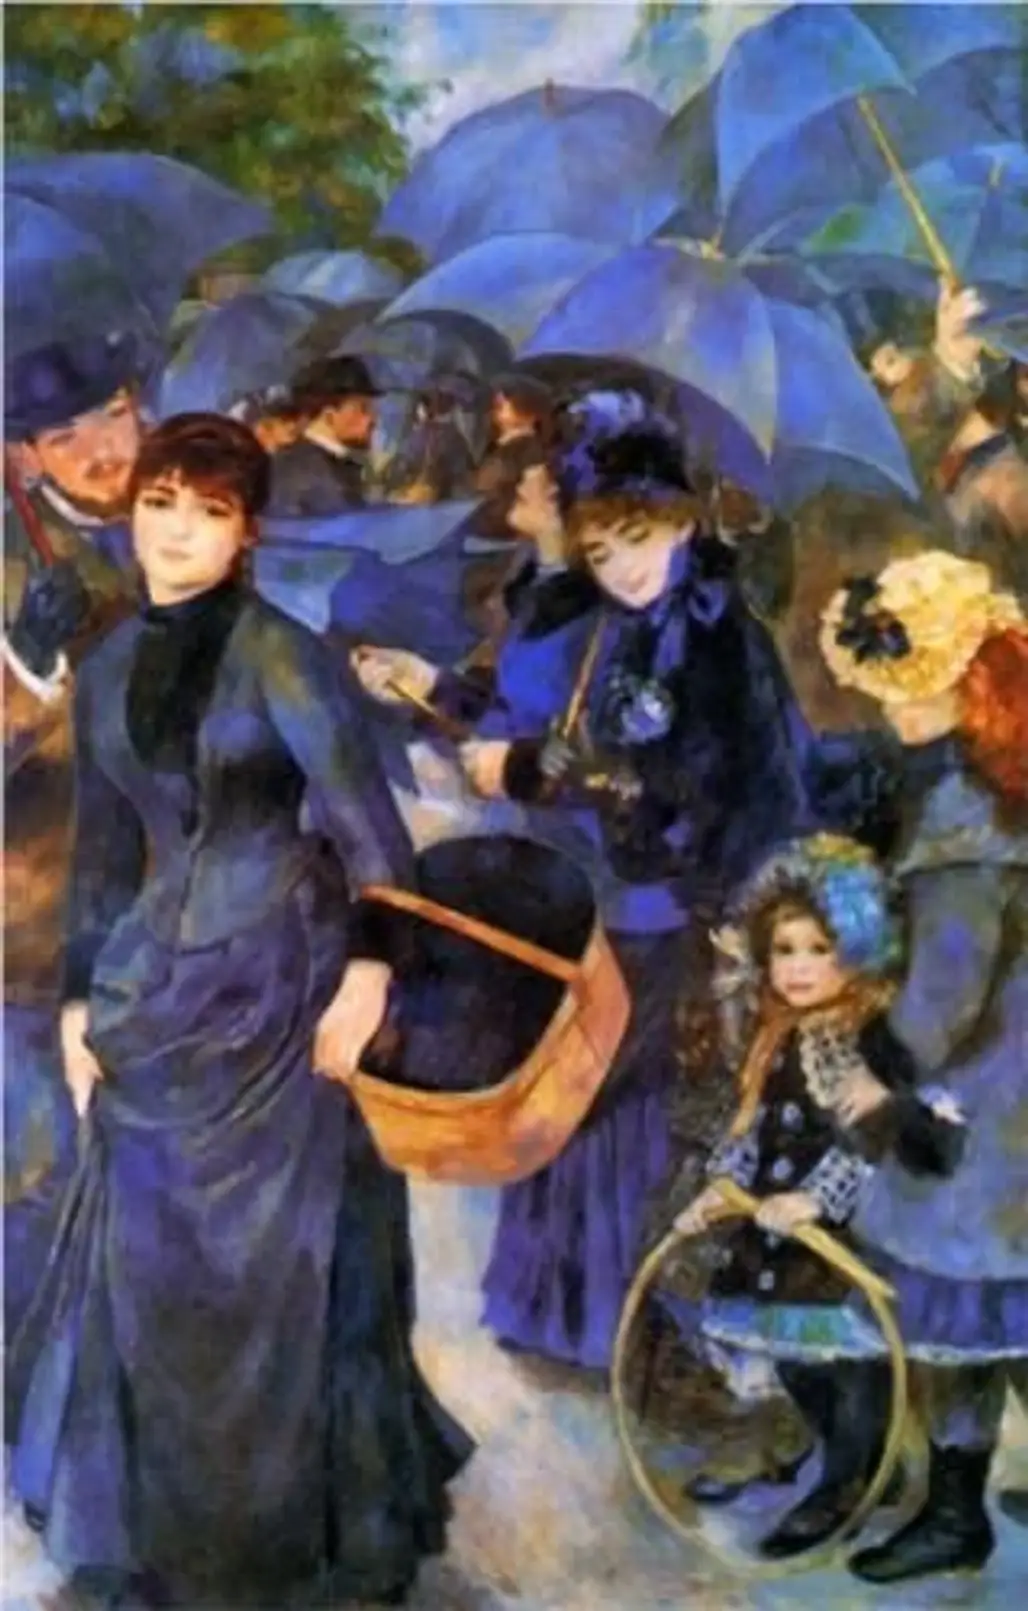 The Umbrellas - Renoir